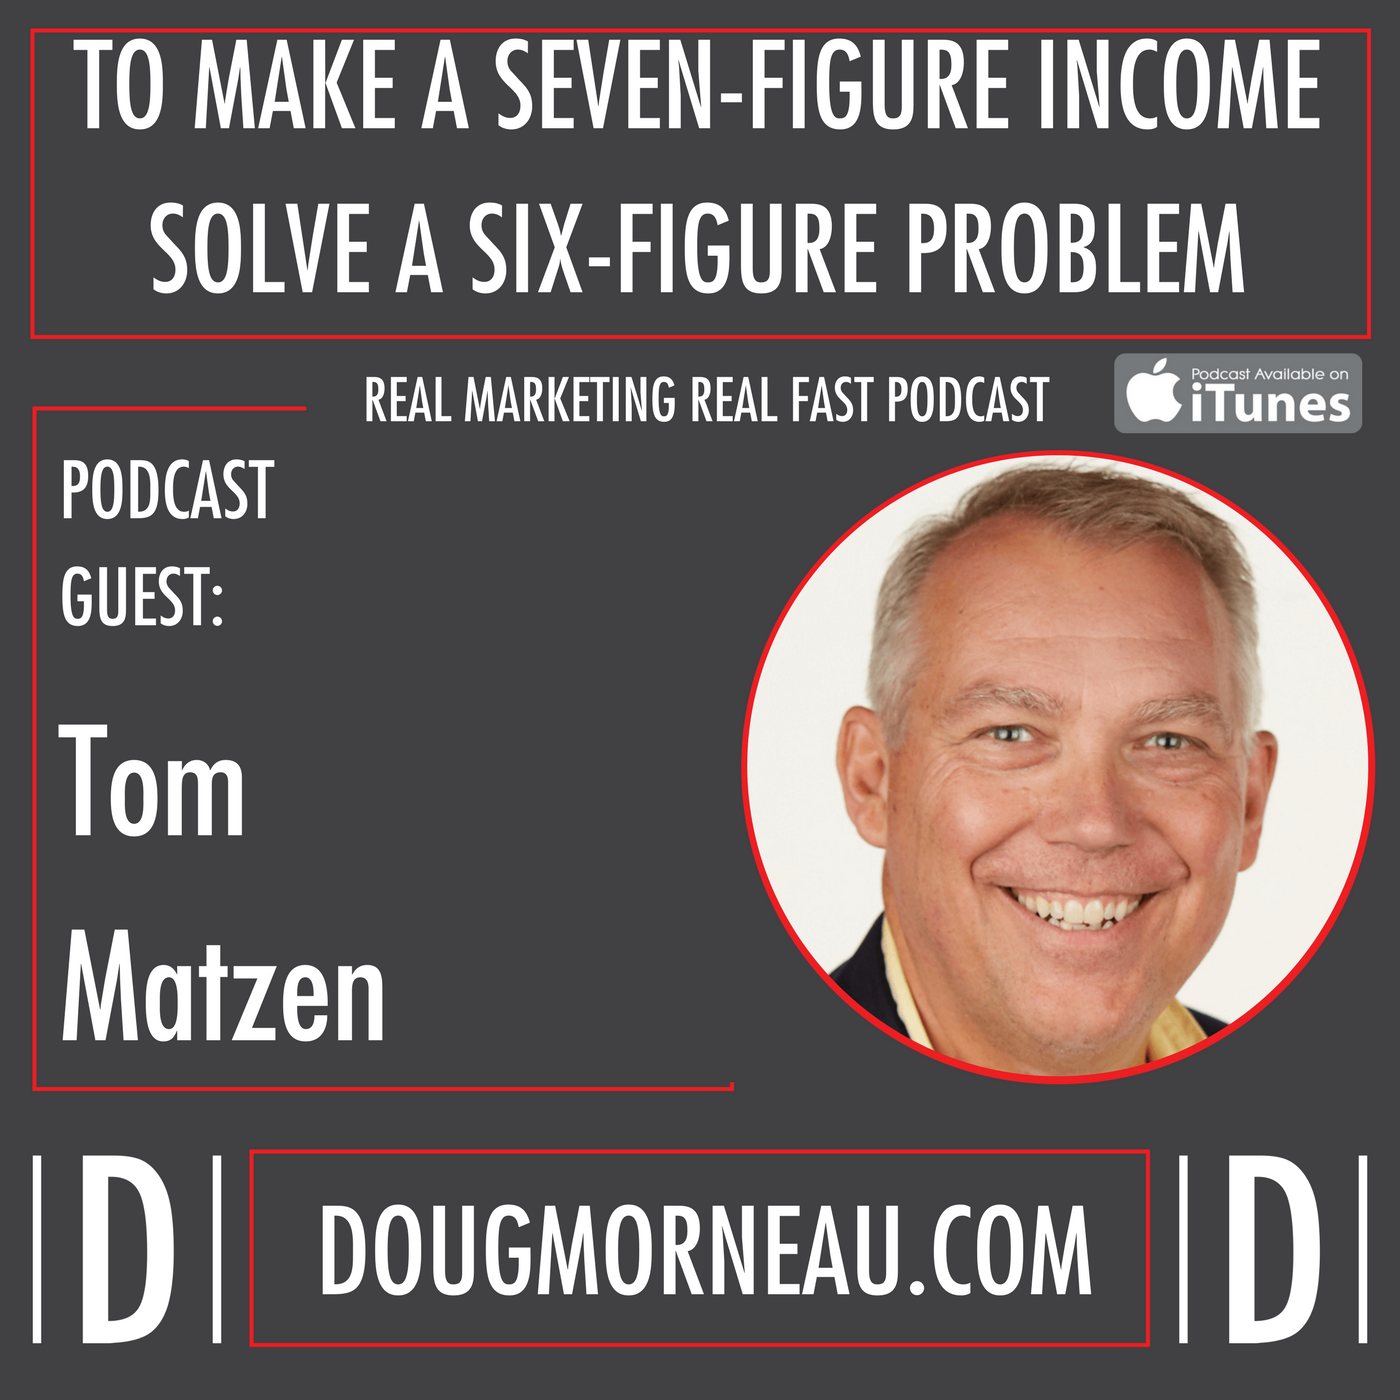 To make a seven-figure income solve a six-figure problem - DOUG MORNEAU - TOM MATZEN - REAL MARKETING REAL FAST PODCAST